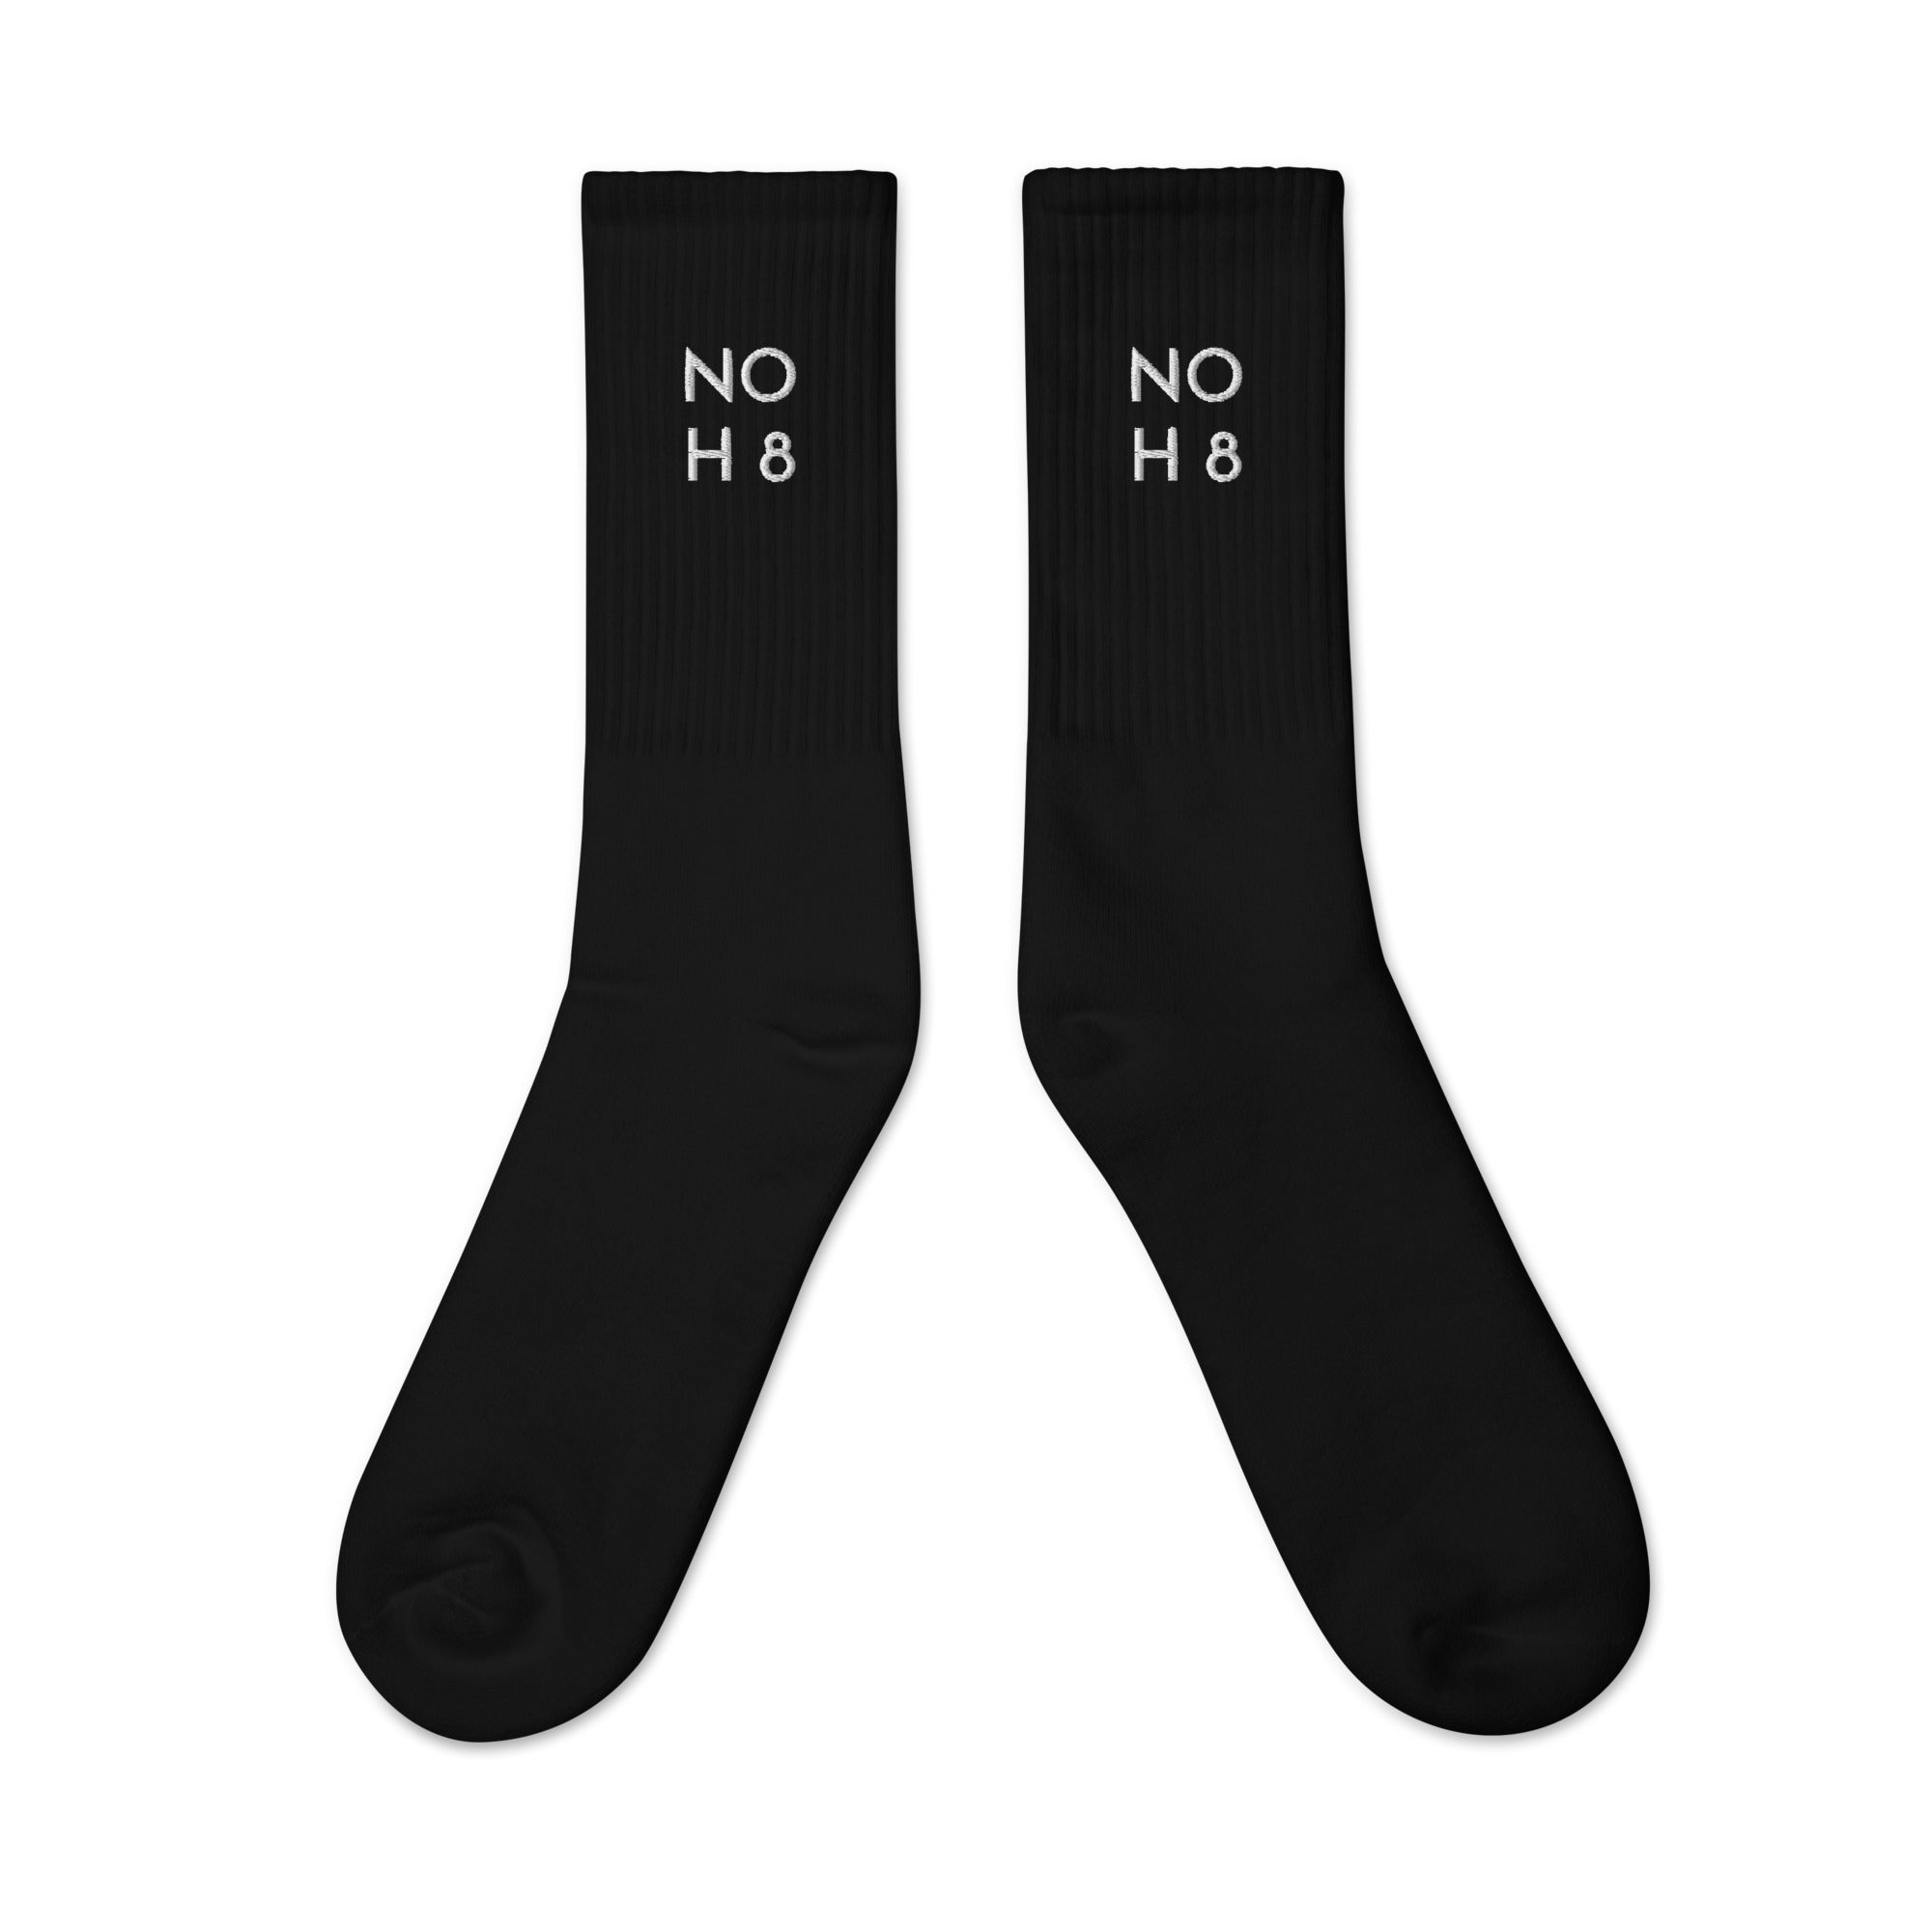 NOH8 Socks